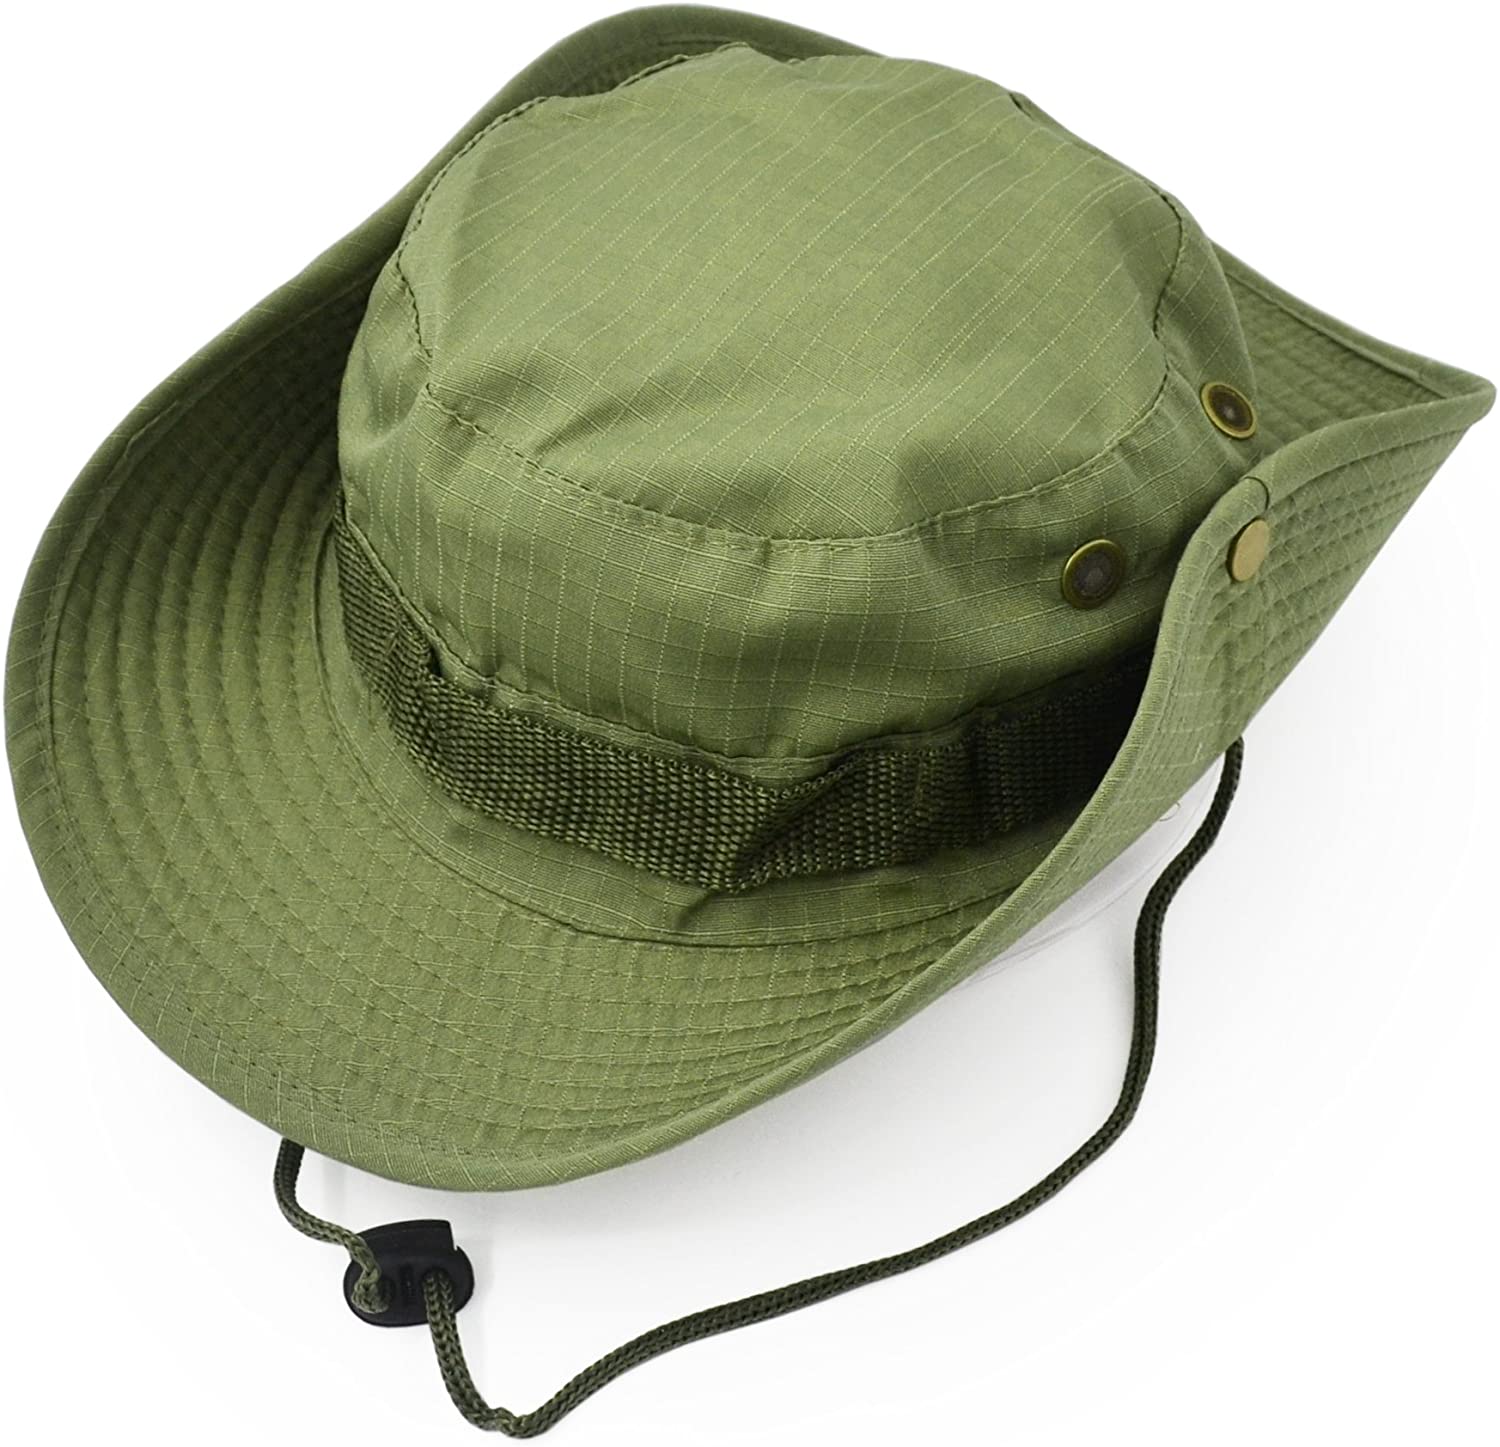 Fishing Hat UV Protection, Wide Brim Sun Hats for Hiking Hunting, Men Women  Camping Boating Safari Gardening Working Cooling Hat 